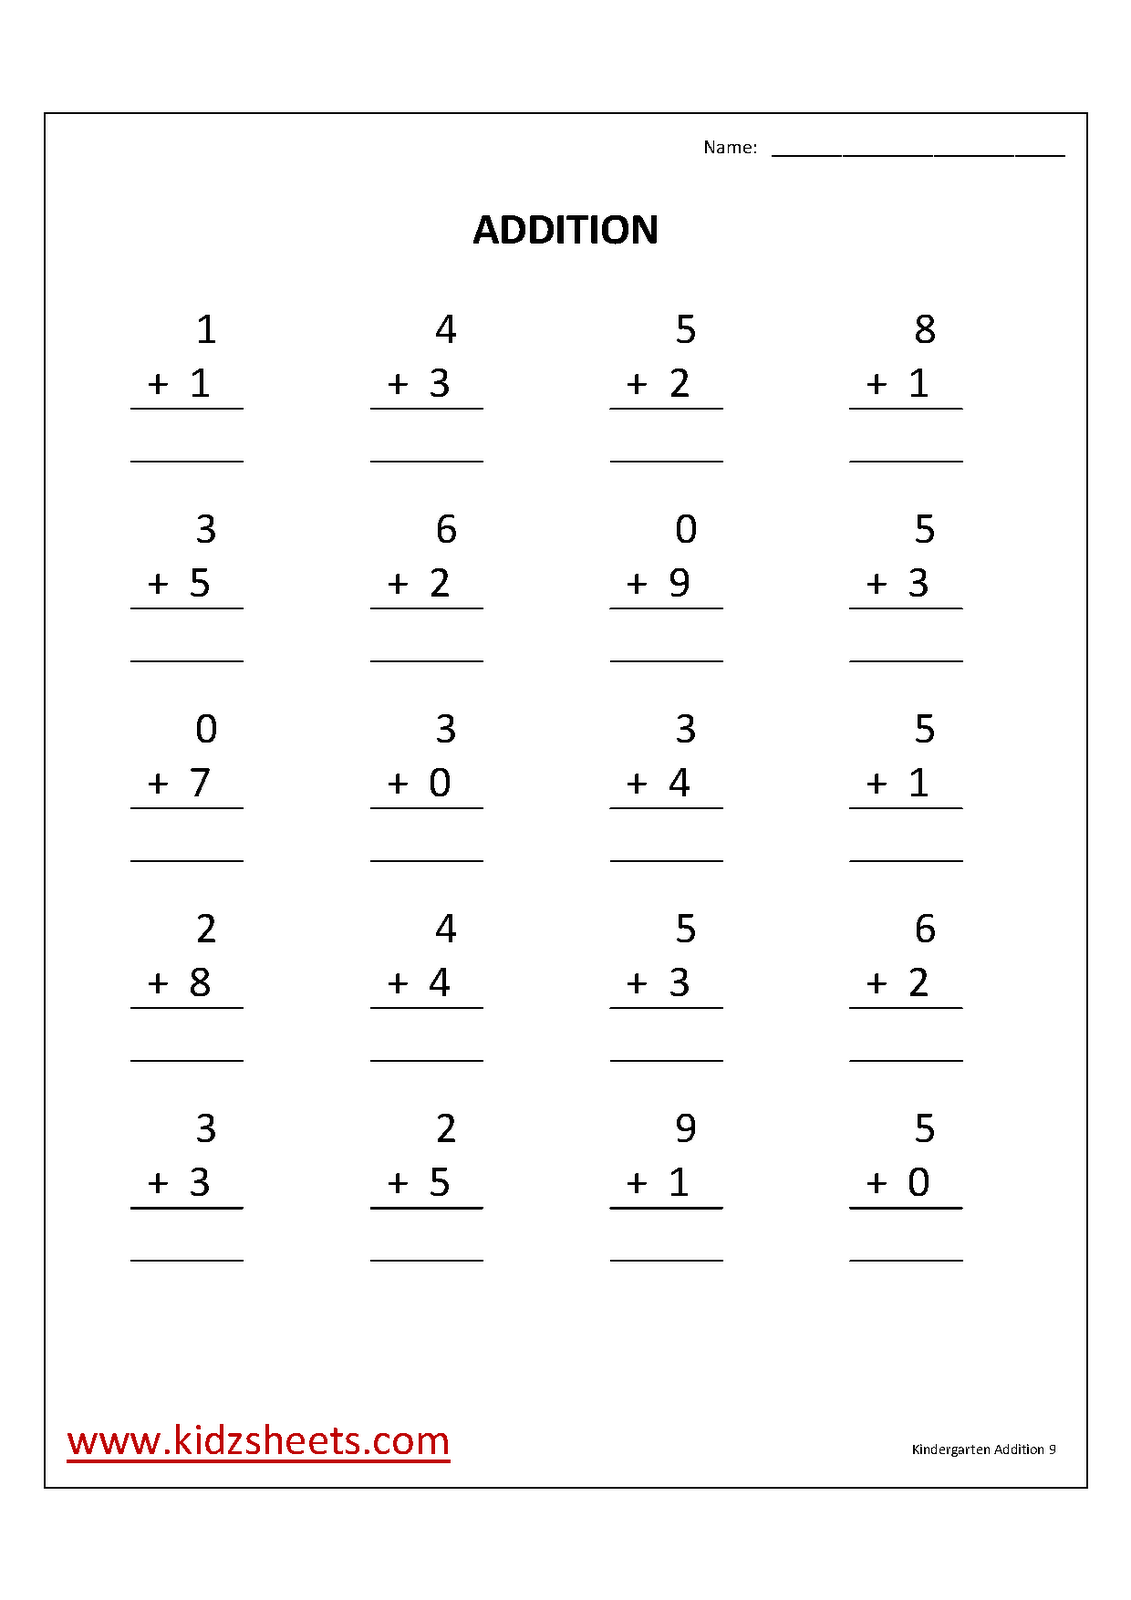 6-best-images-of-printable-kindergarten-math-addition-worksheets-kindergarten-math-addition